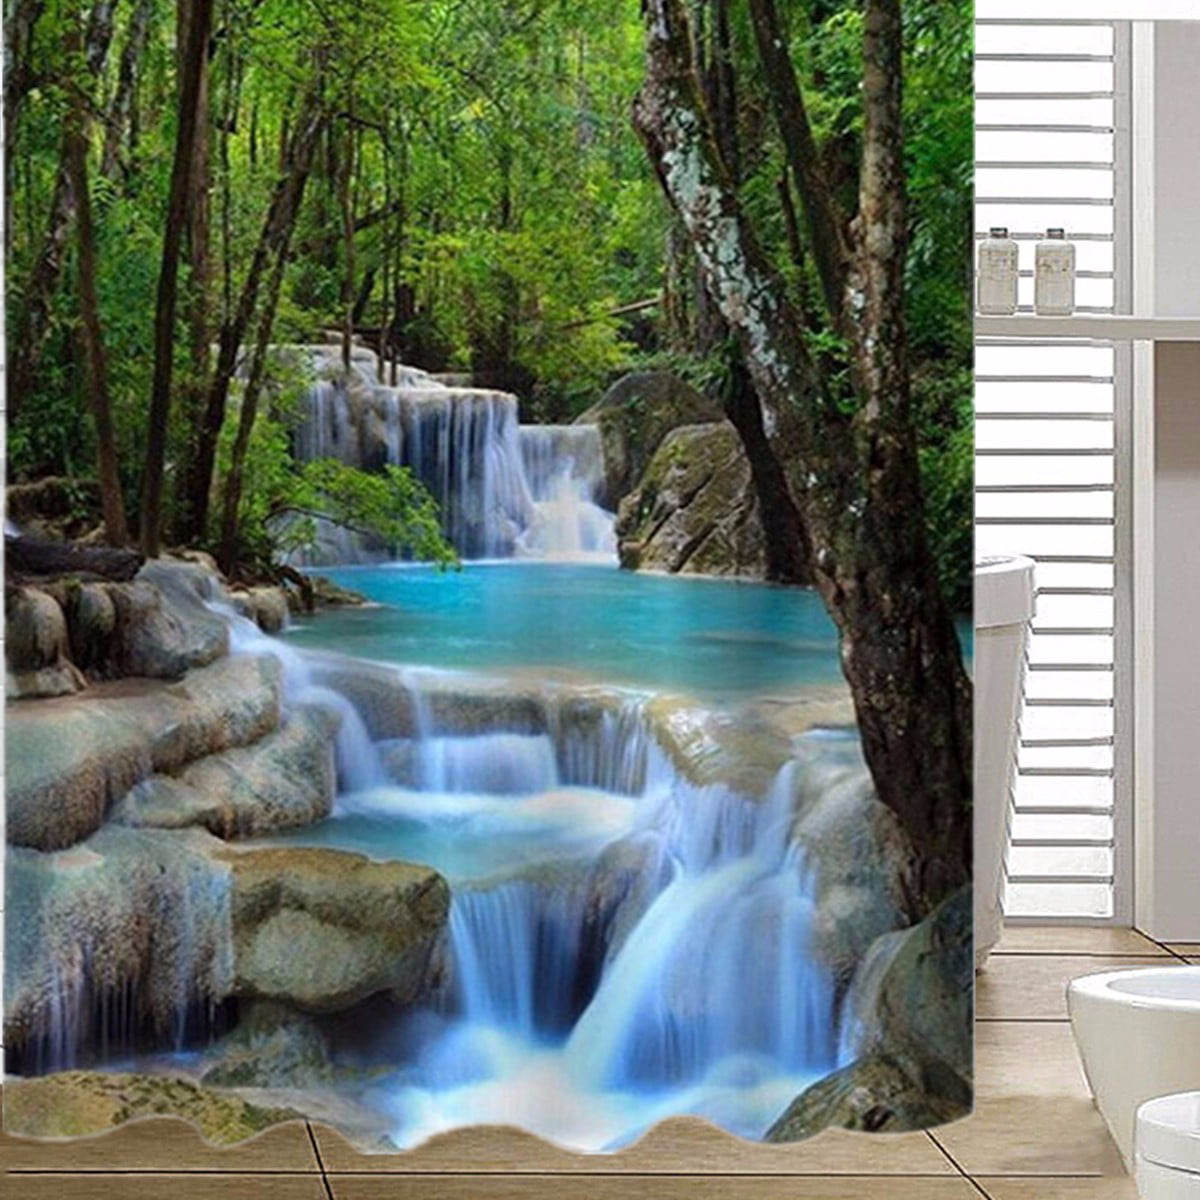 Waterproof Bathroom Shower Curtain Forest Waterfall Rocks Art Decor 78 x 70 Inch 